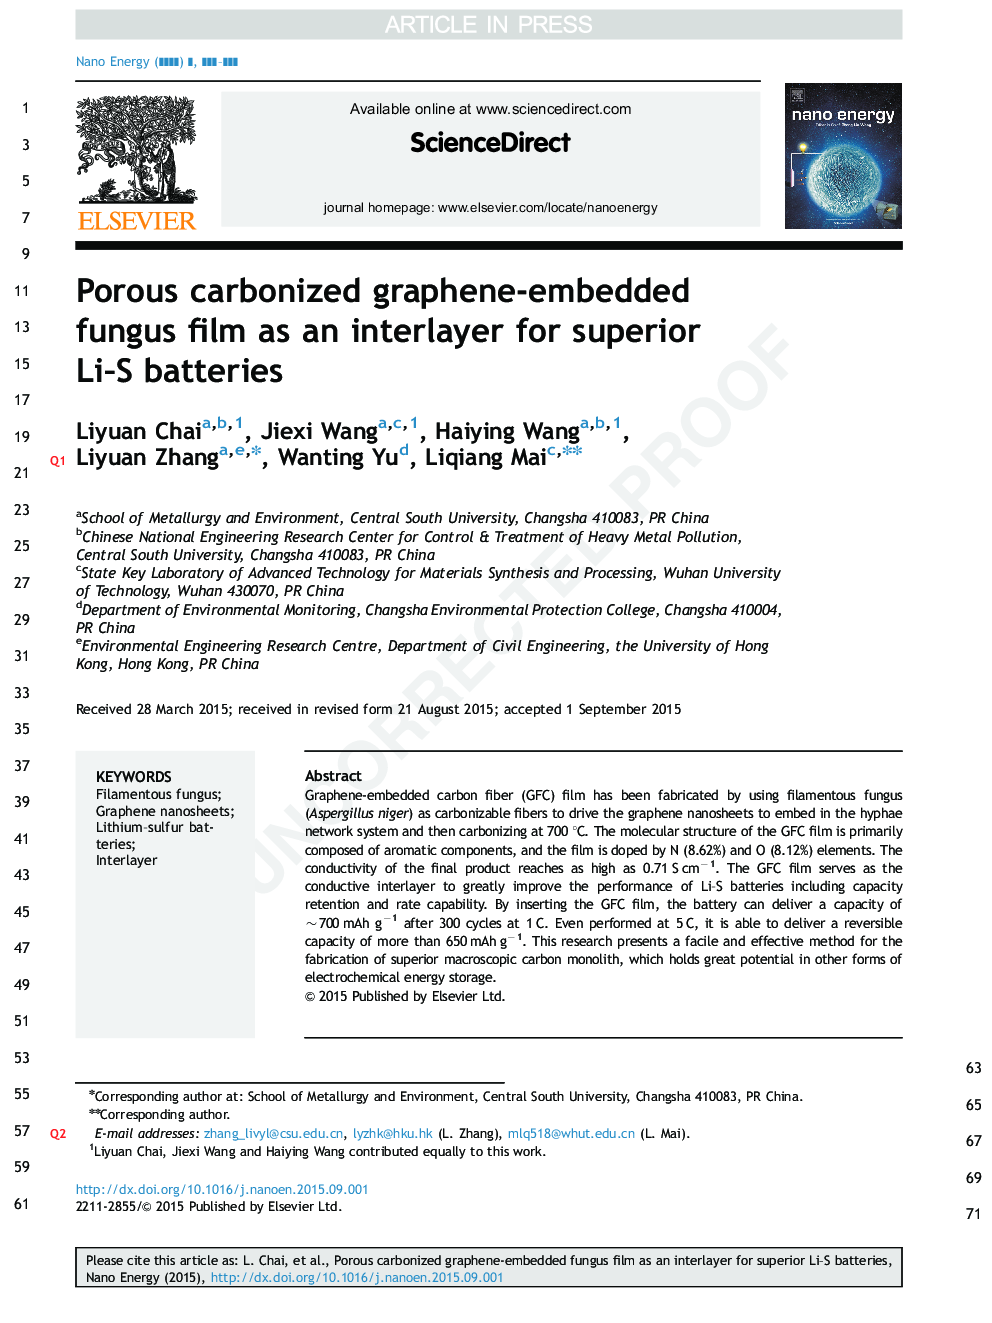 Porous carbonized graphene-embedded fungus film as an interlayer for superior Li-S batteries